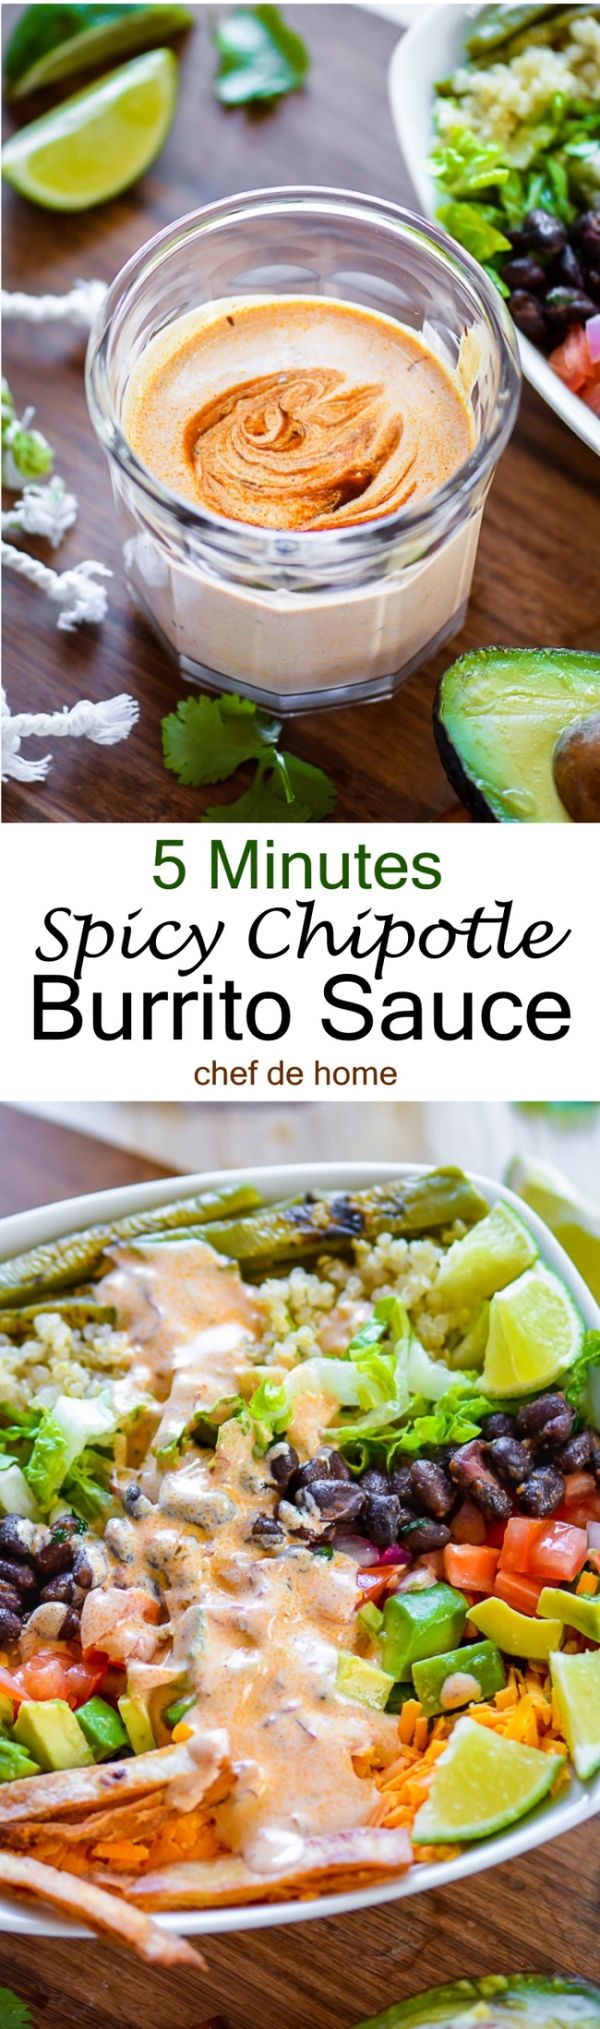 5 Minutes Chipotle Burrito Sauce